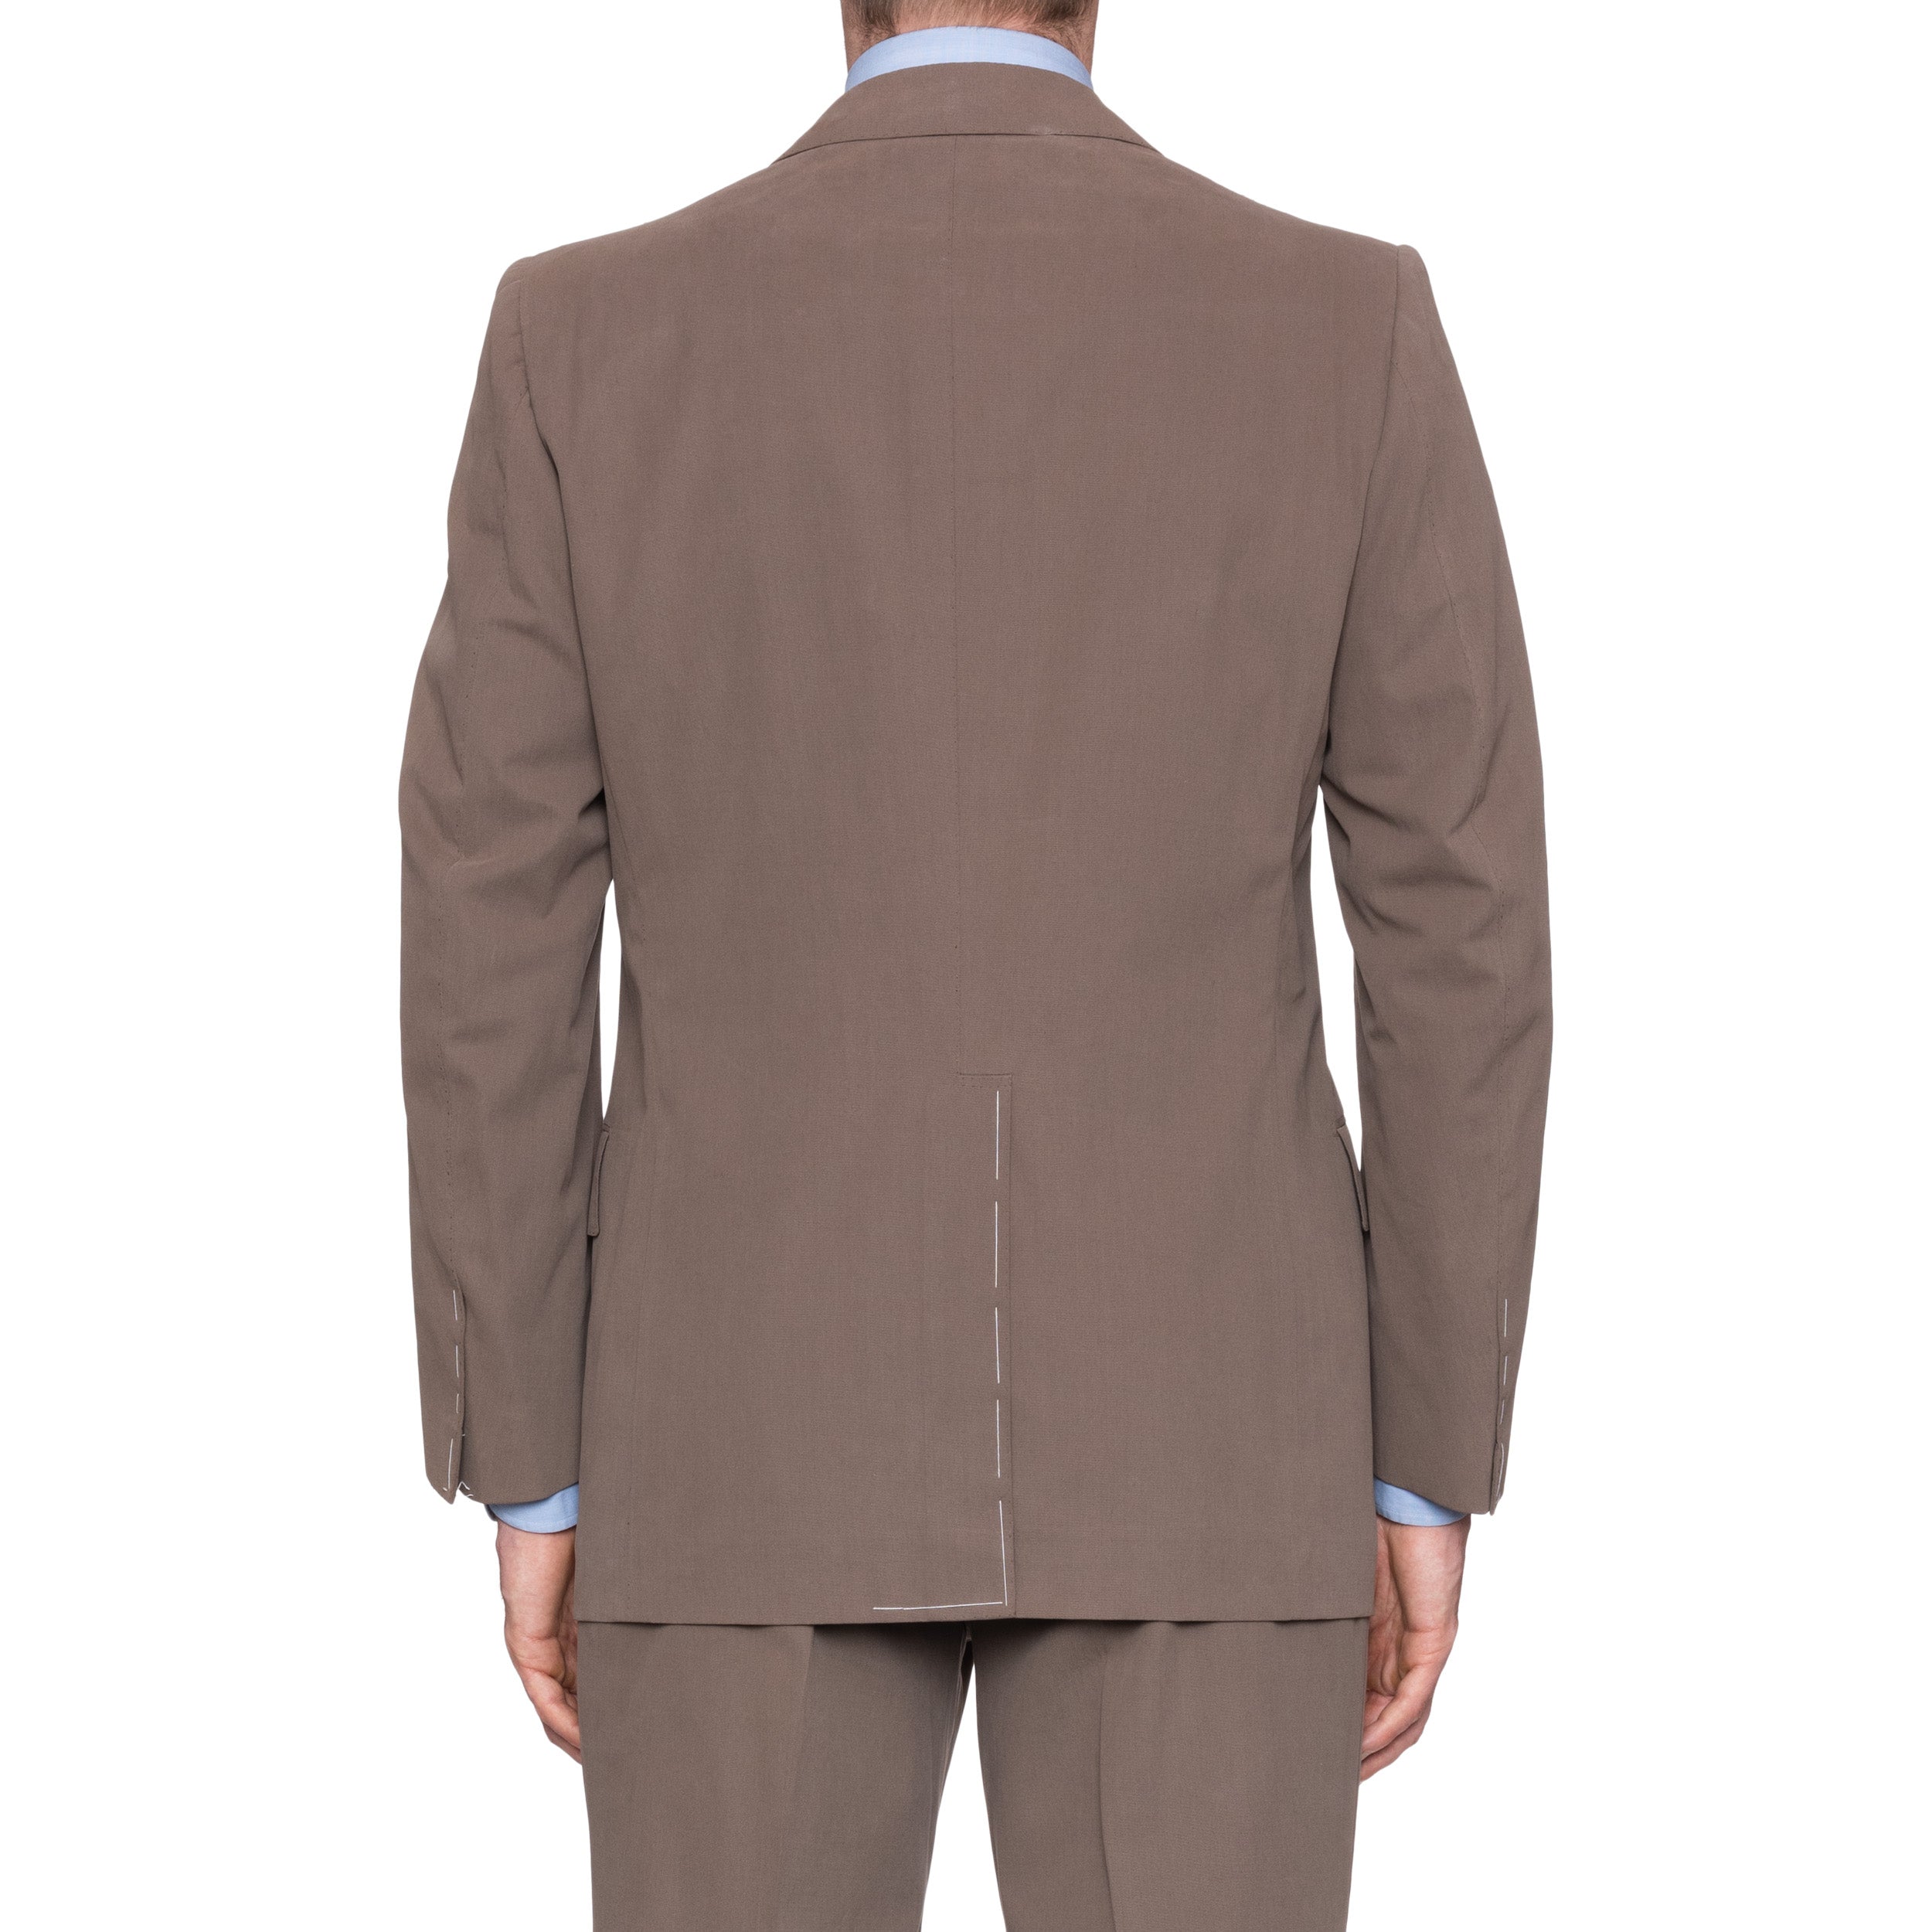 CESARE ATTOLINI Napoli Tan Cotton Peak Lapel Spring-Summer Suit EU 50 NEW US 40